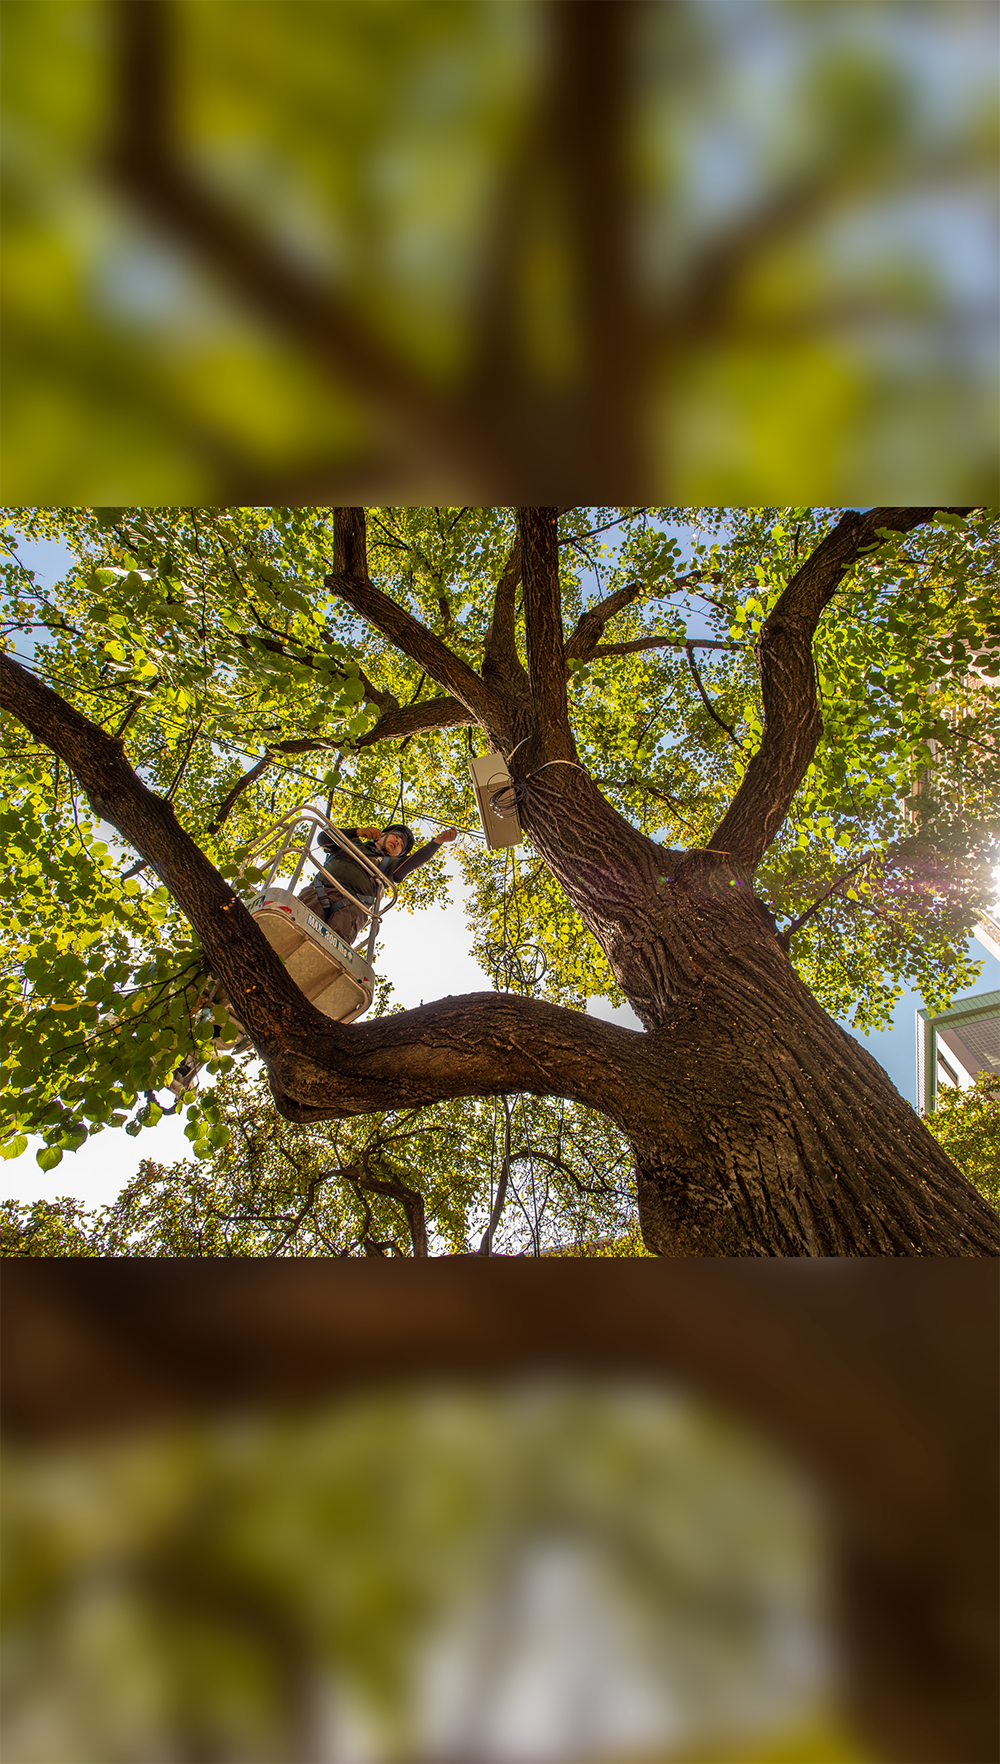 Arborist installing equipment on a tree